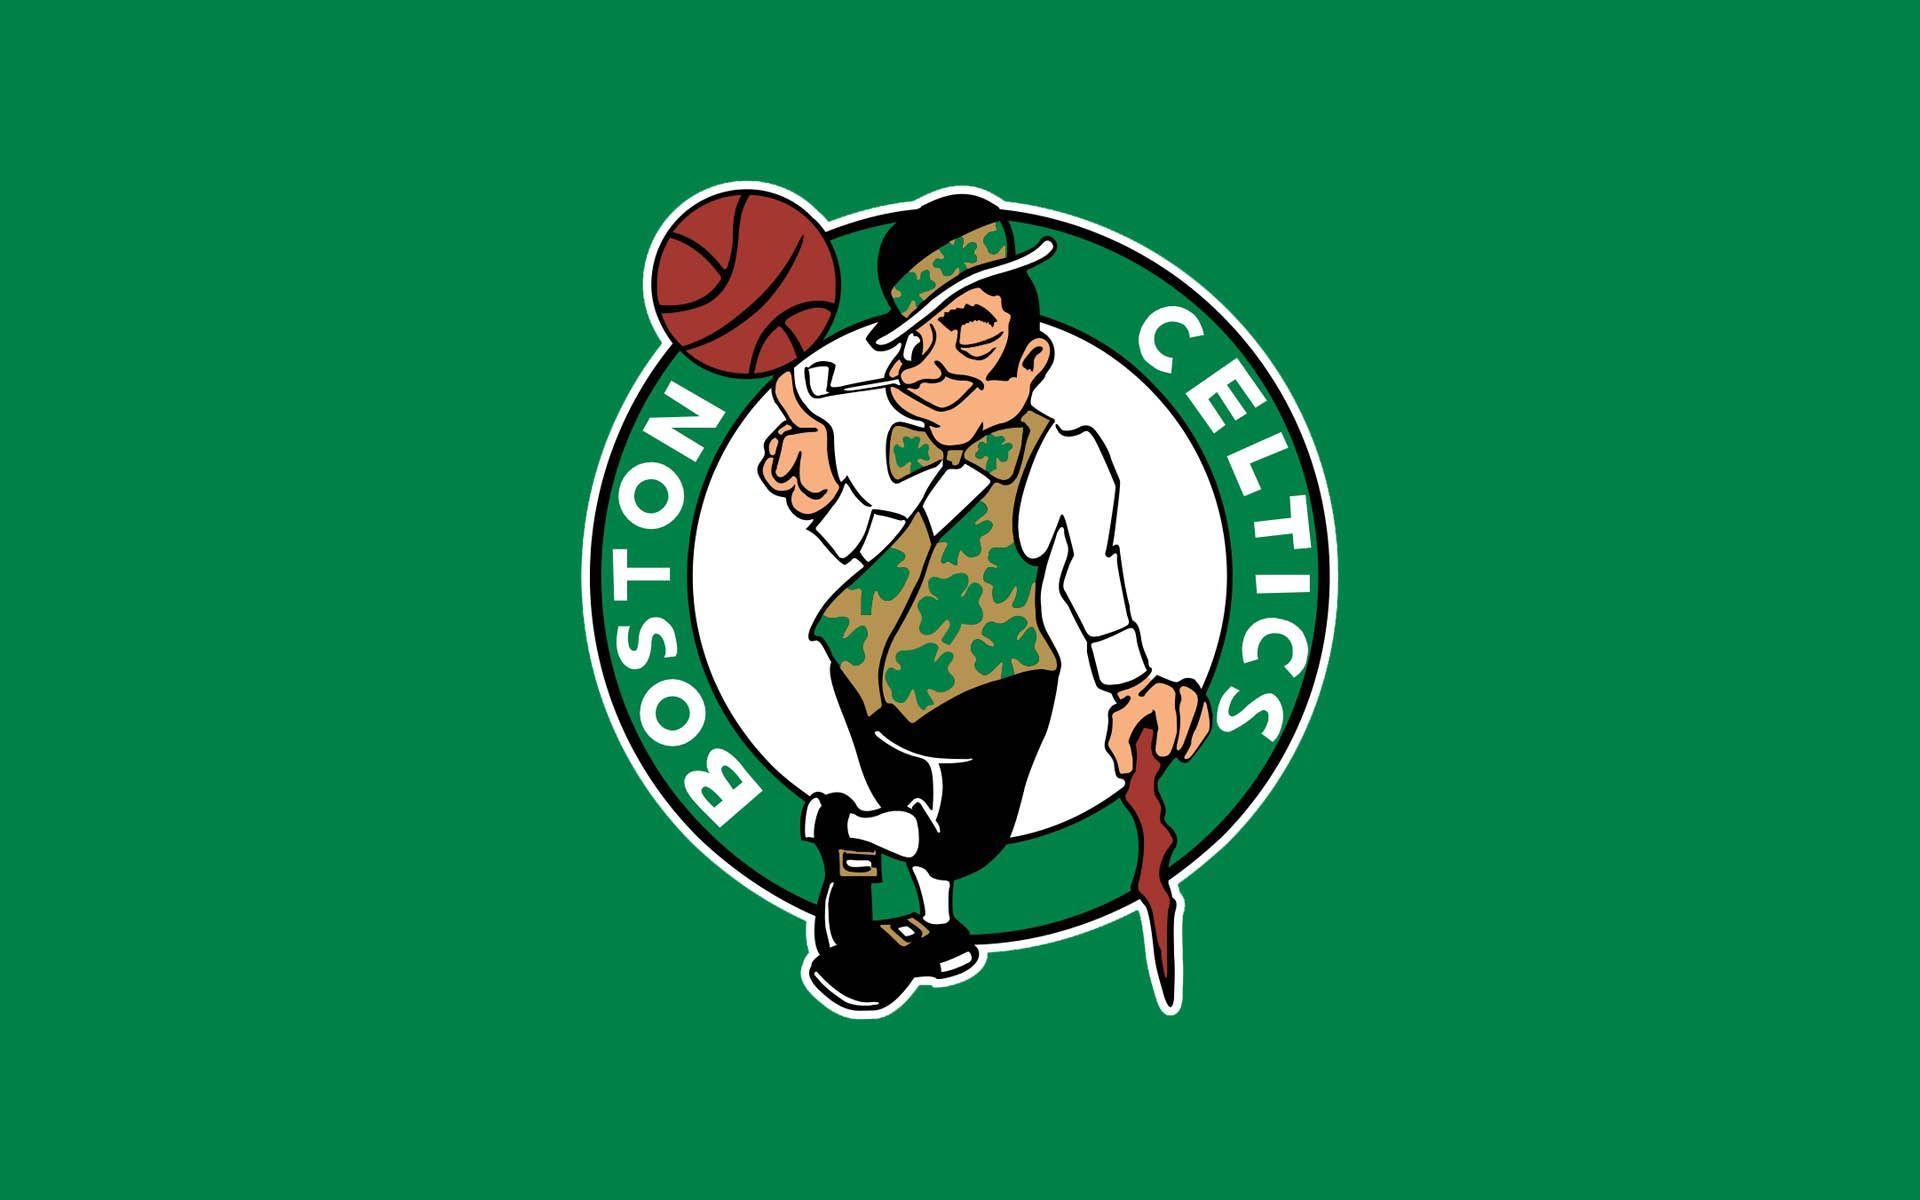 Free Boston Celtics wallpaper. Boston Celtics wallpaper